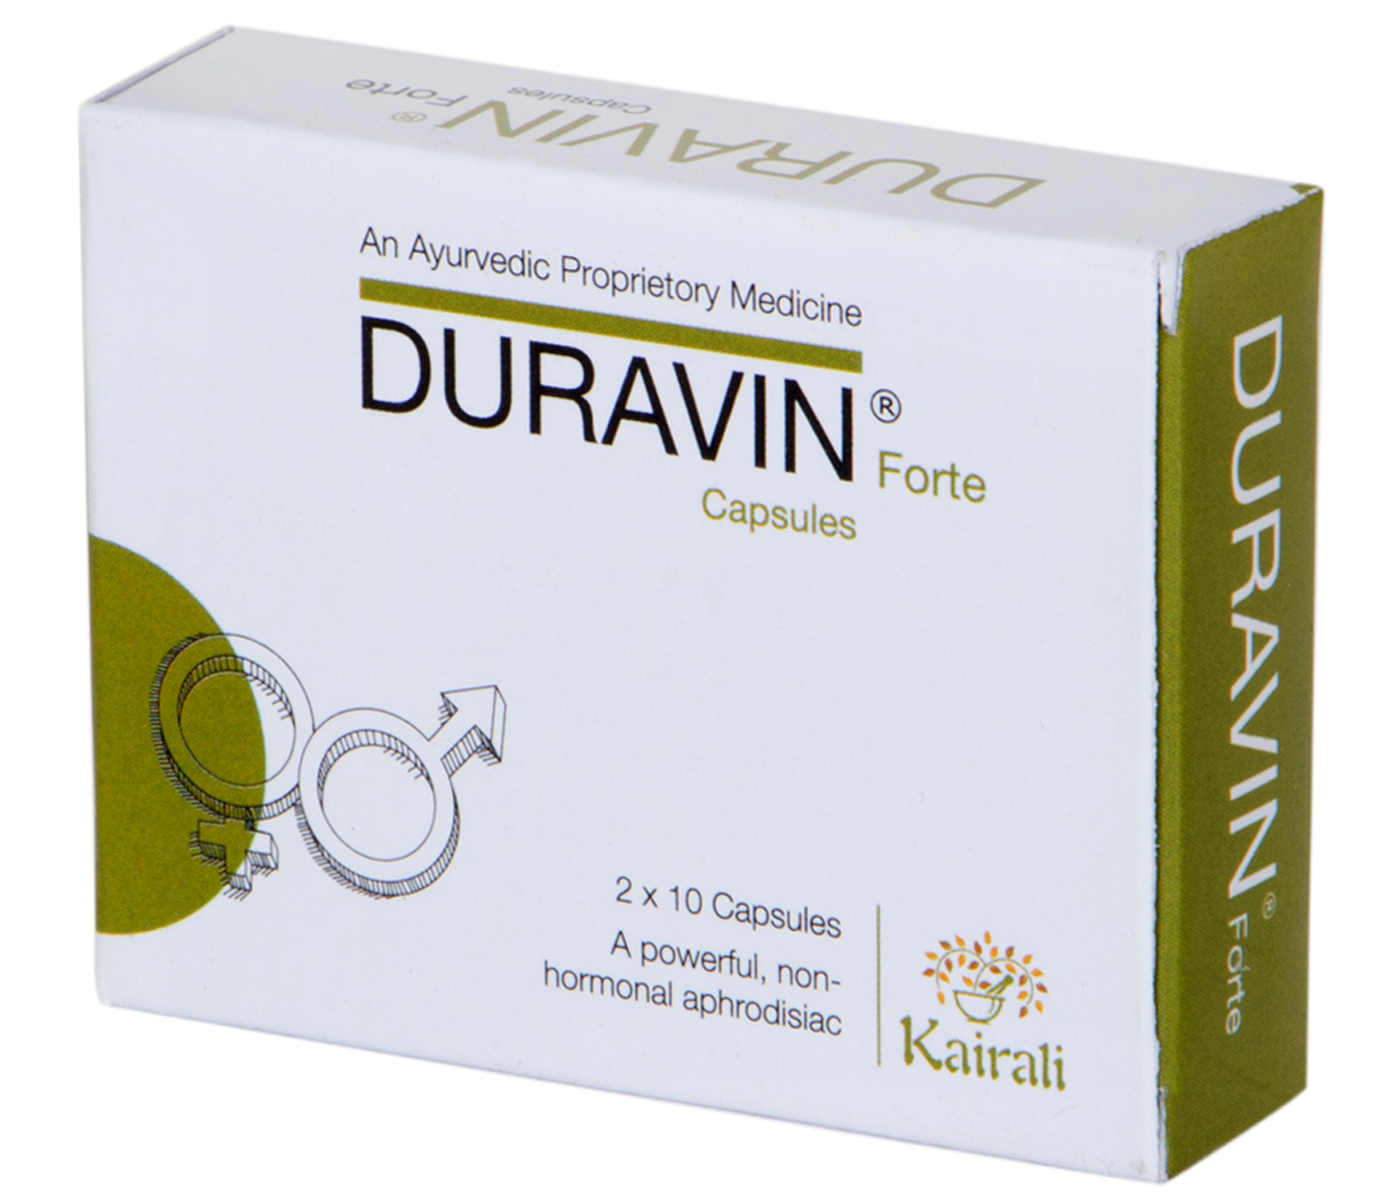 Buy Kairali Duravin Forte Capsule at Best Price Online